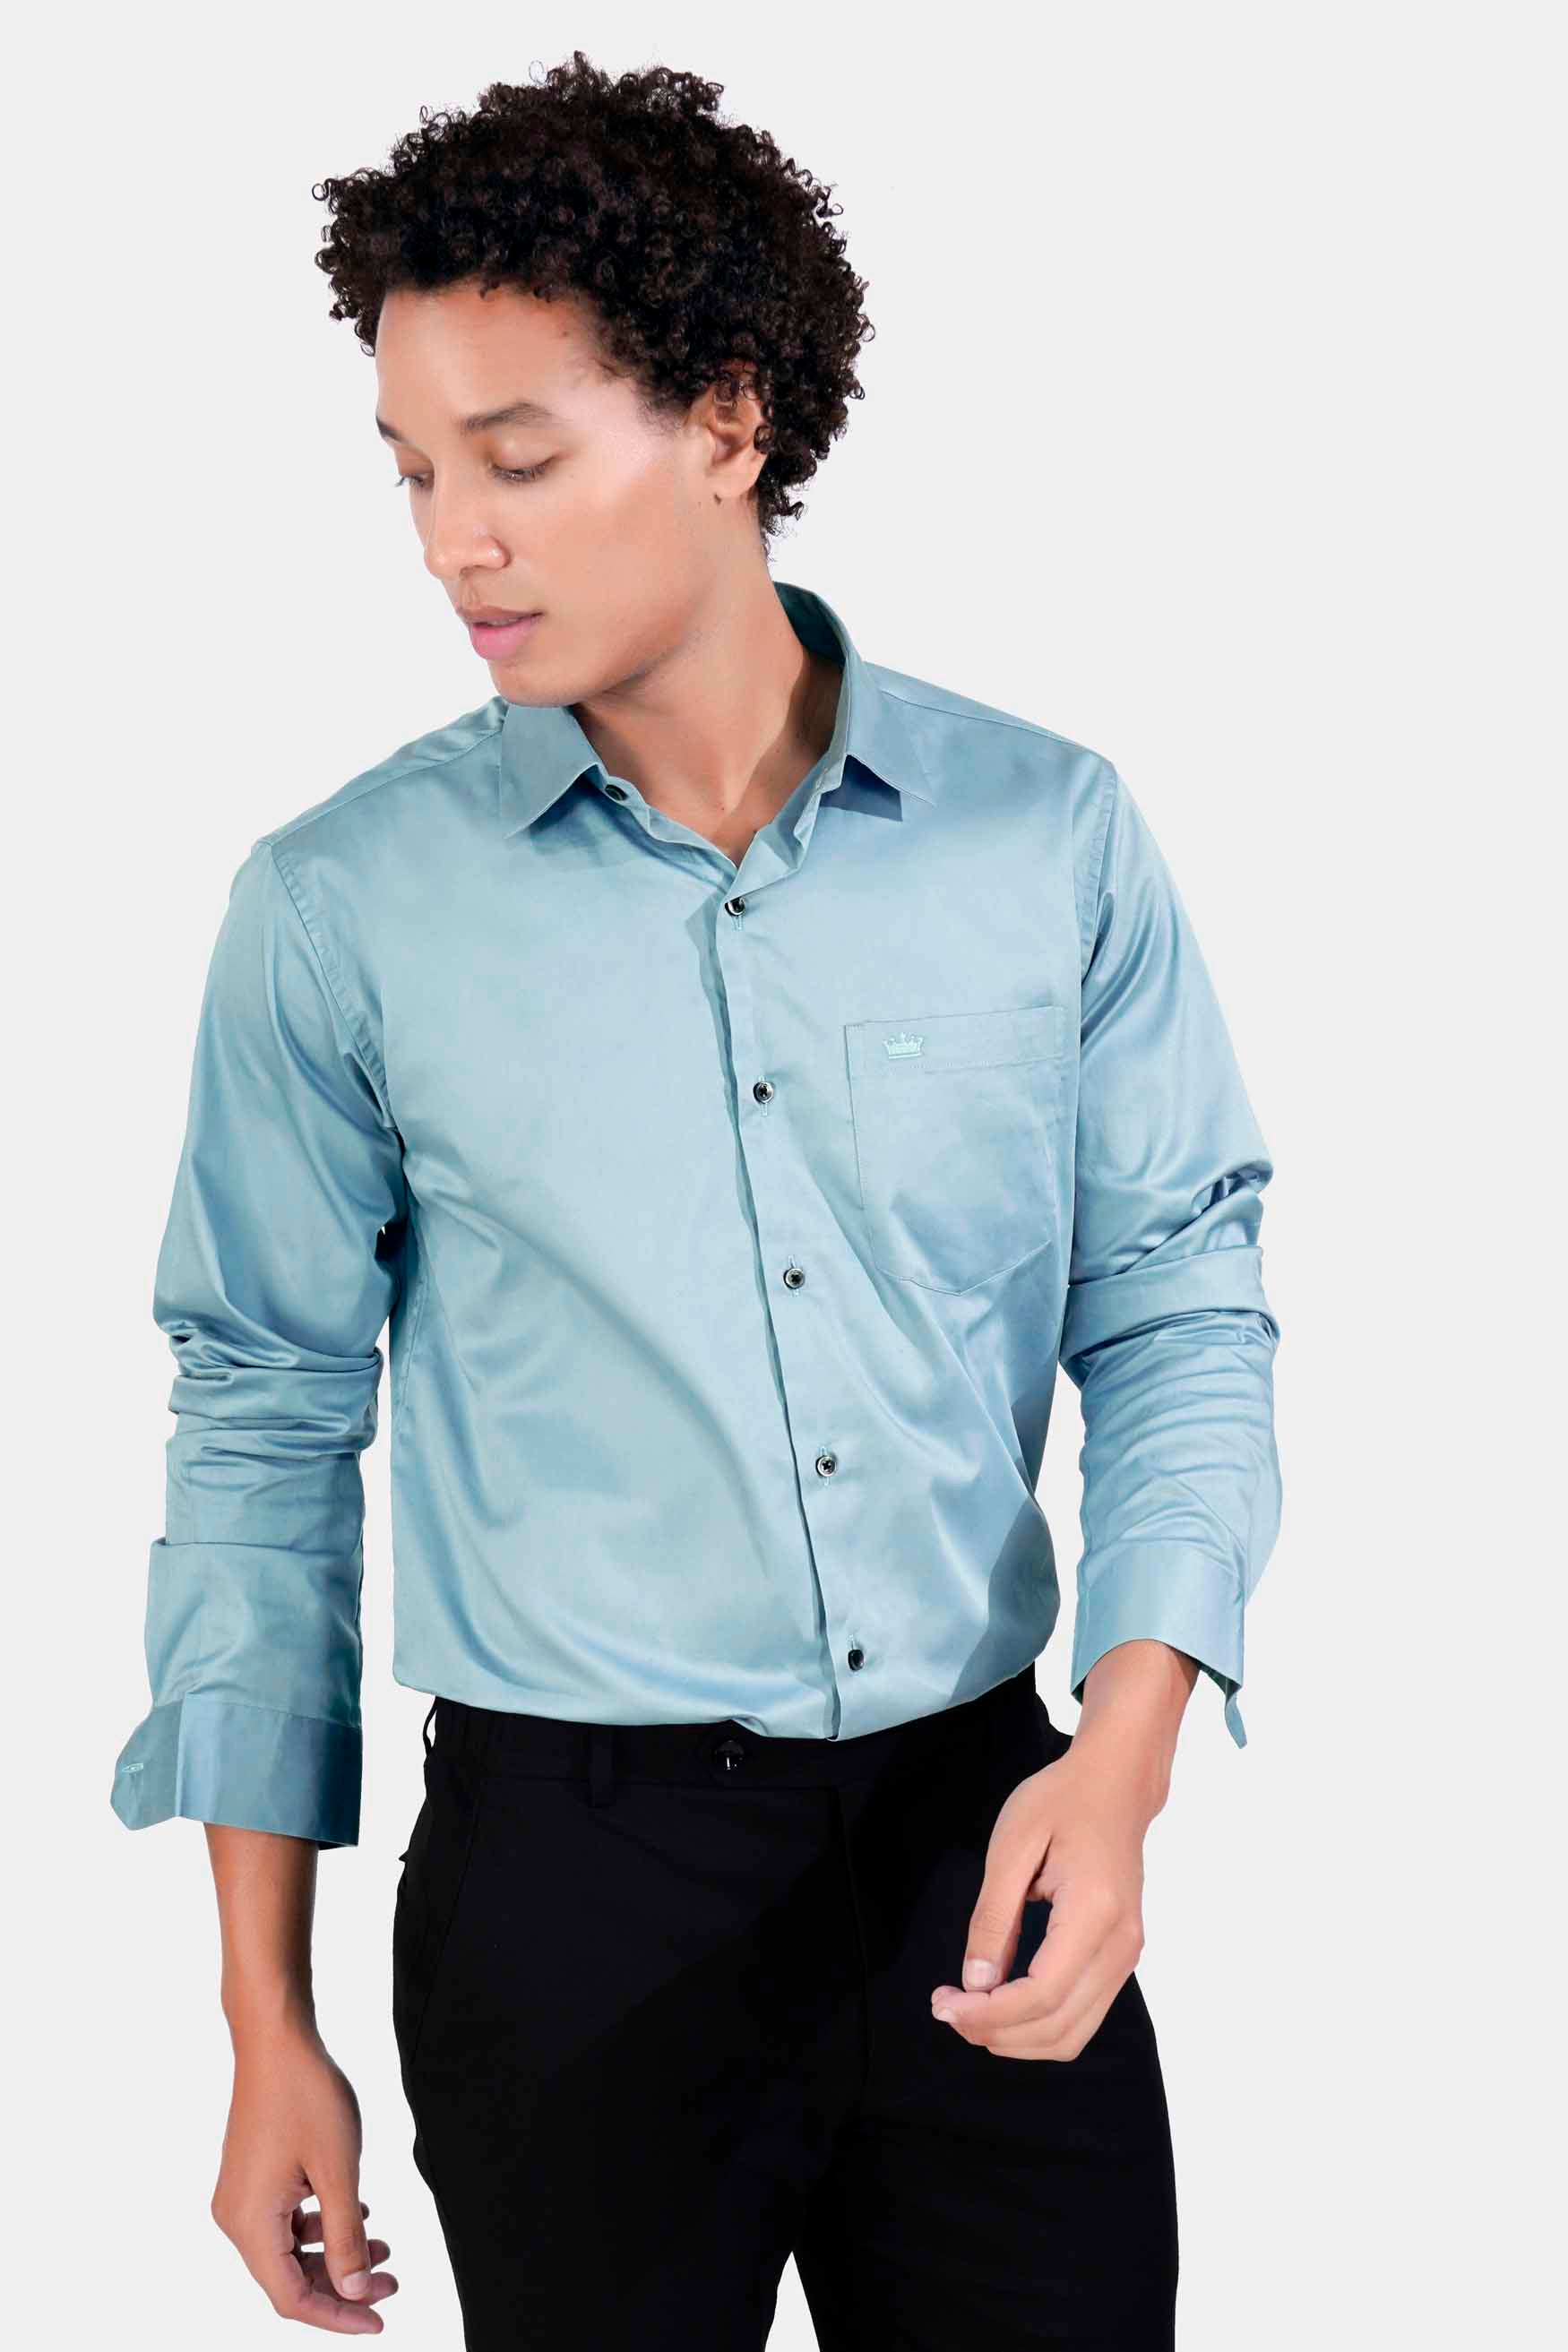 Casper Blue Subtle Sheen Super Soft Premium Cotton Shirt